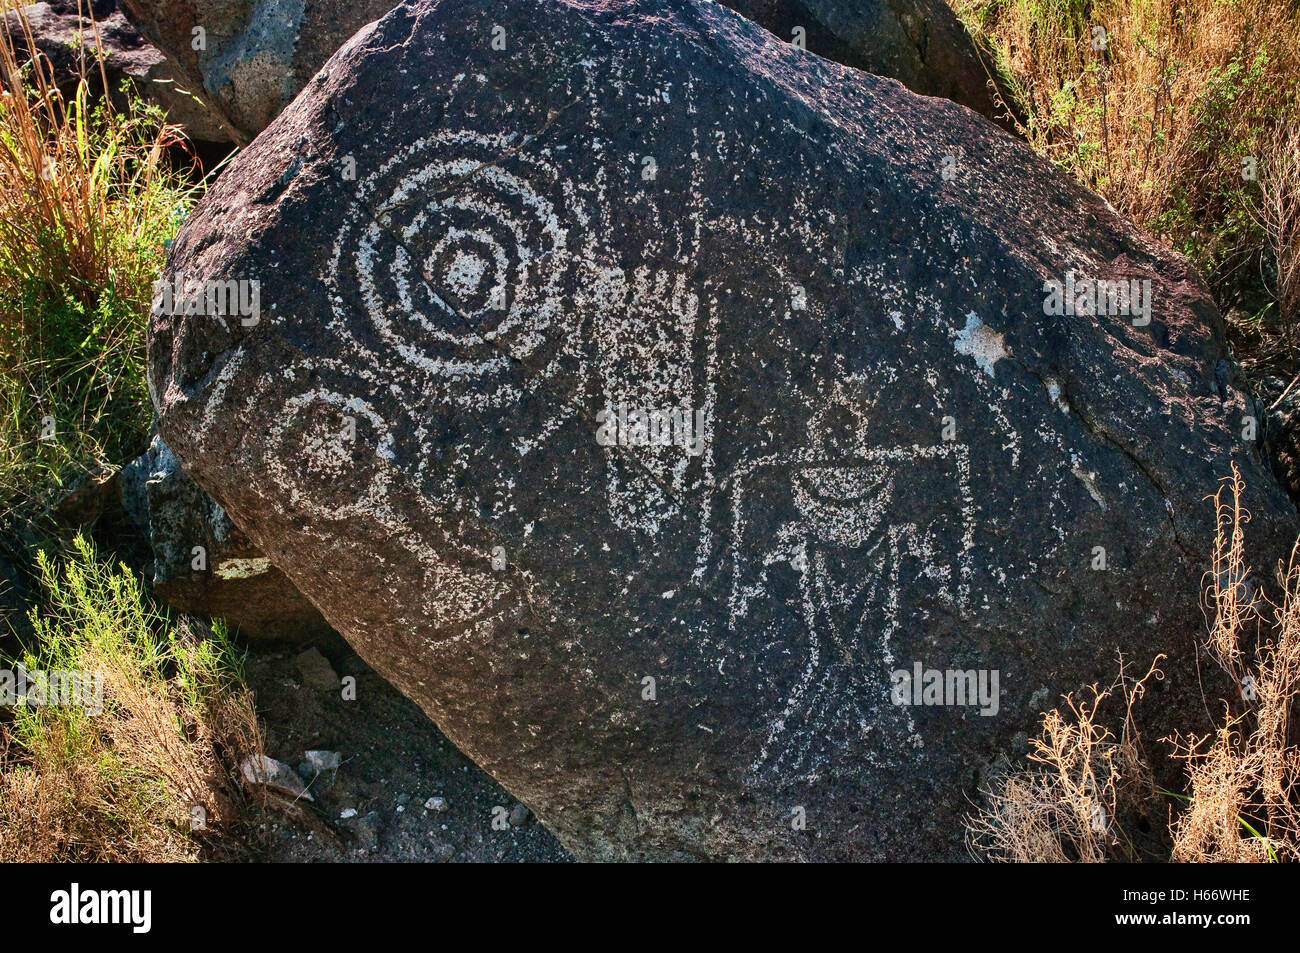 Jornada Mogollon style rock art at Three Rivers Petroglyph Site, Chihuahuan Desert near Sierra Blanca, New Mexico, USA Stock Photo